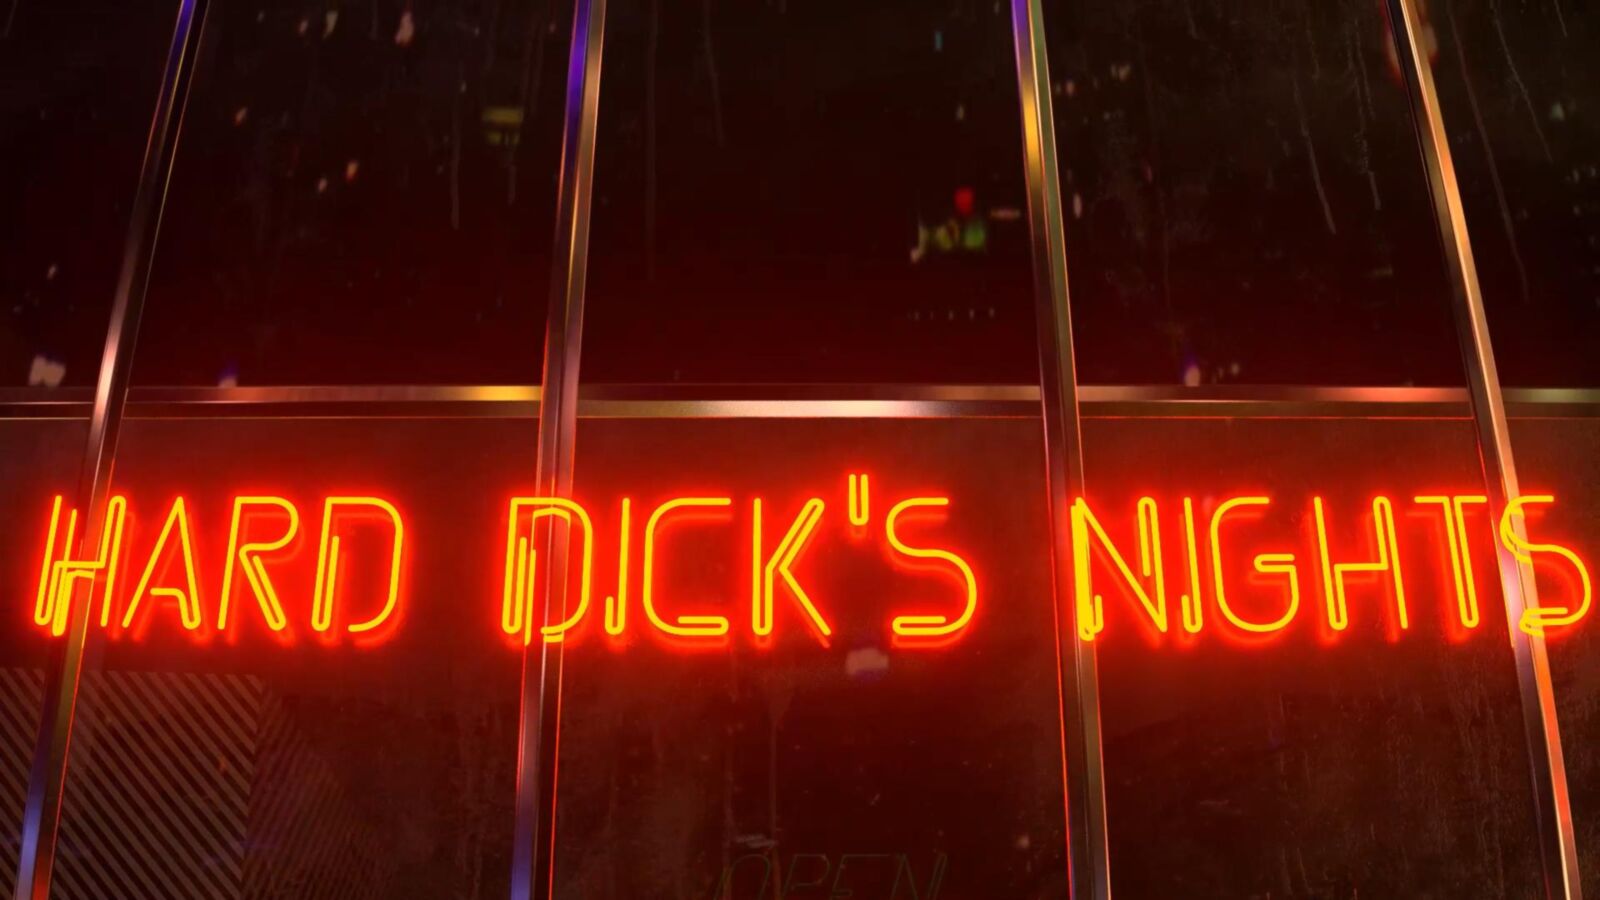 Hard dicks nights